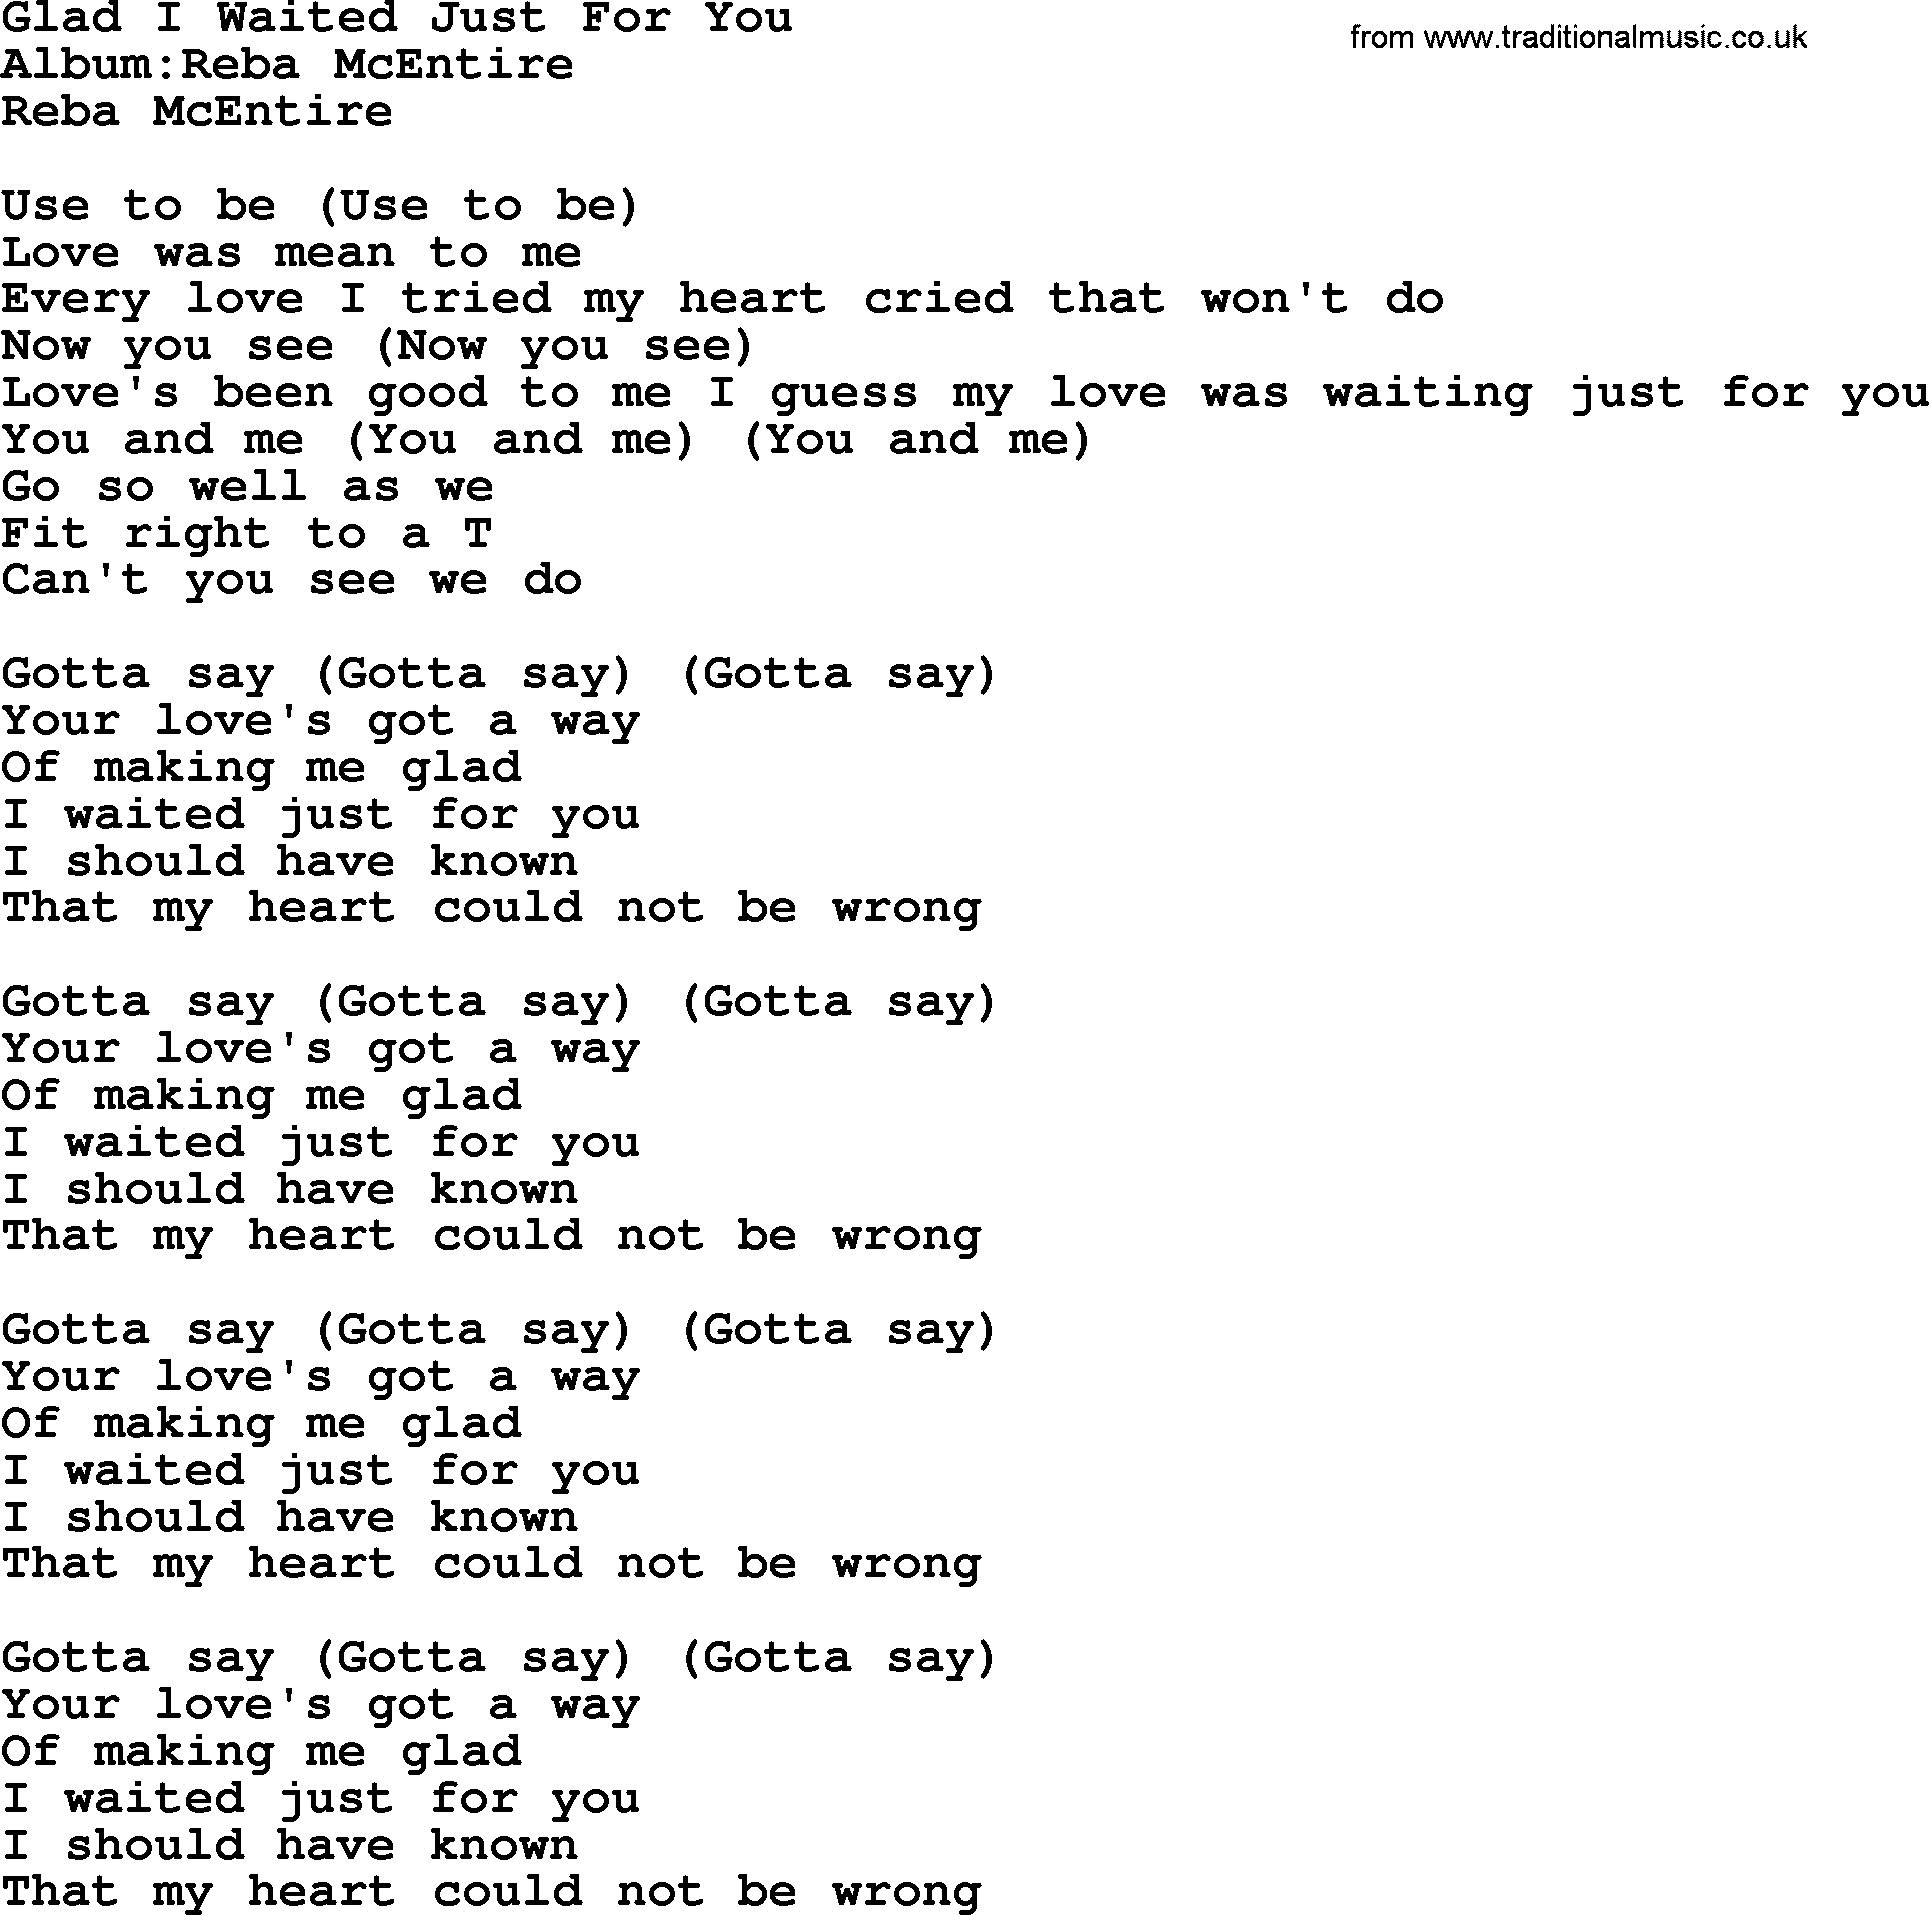 Reba McEntire song: Glad I Waited Just For You lyrics